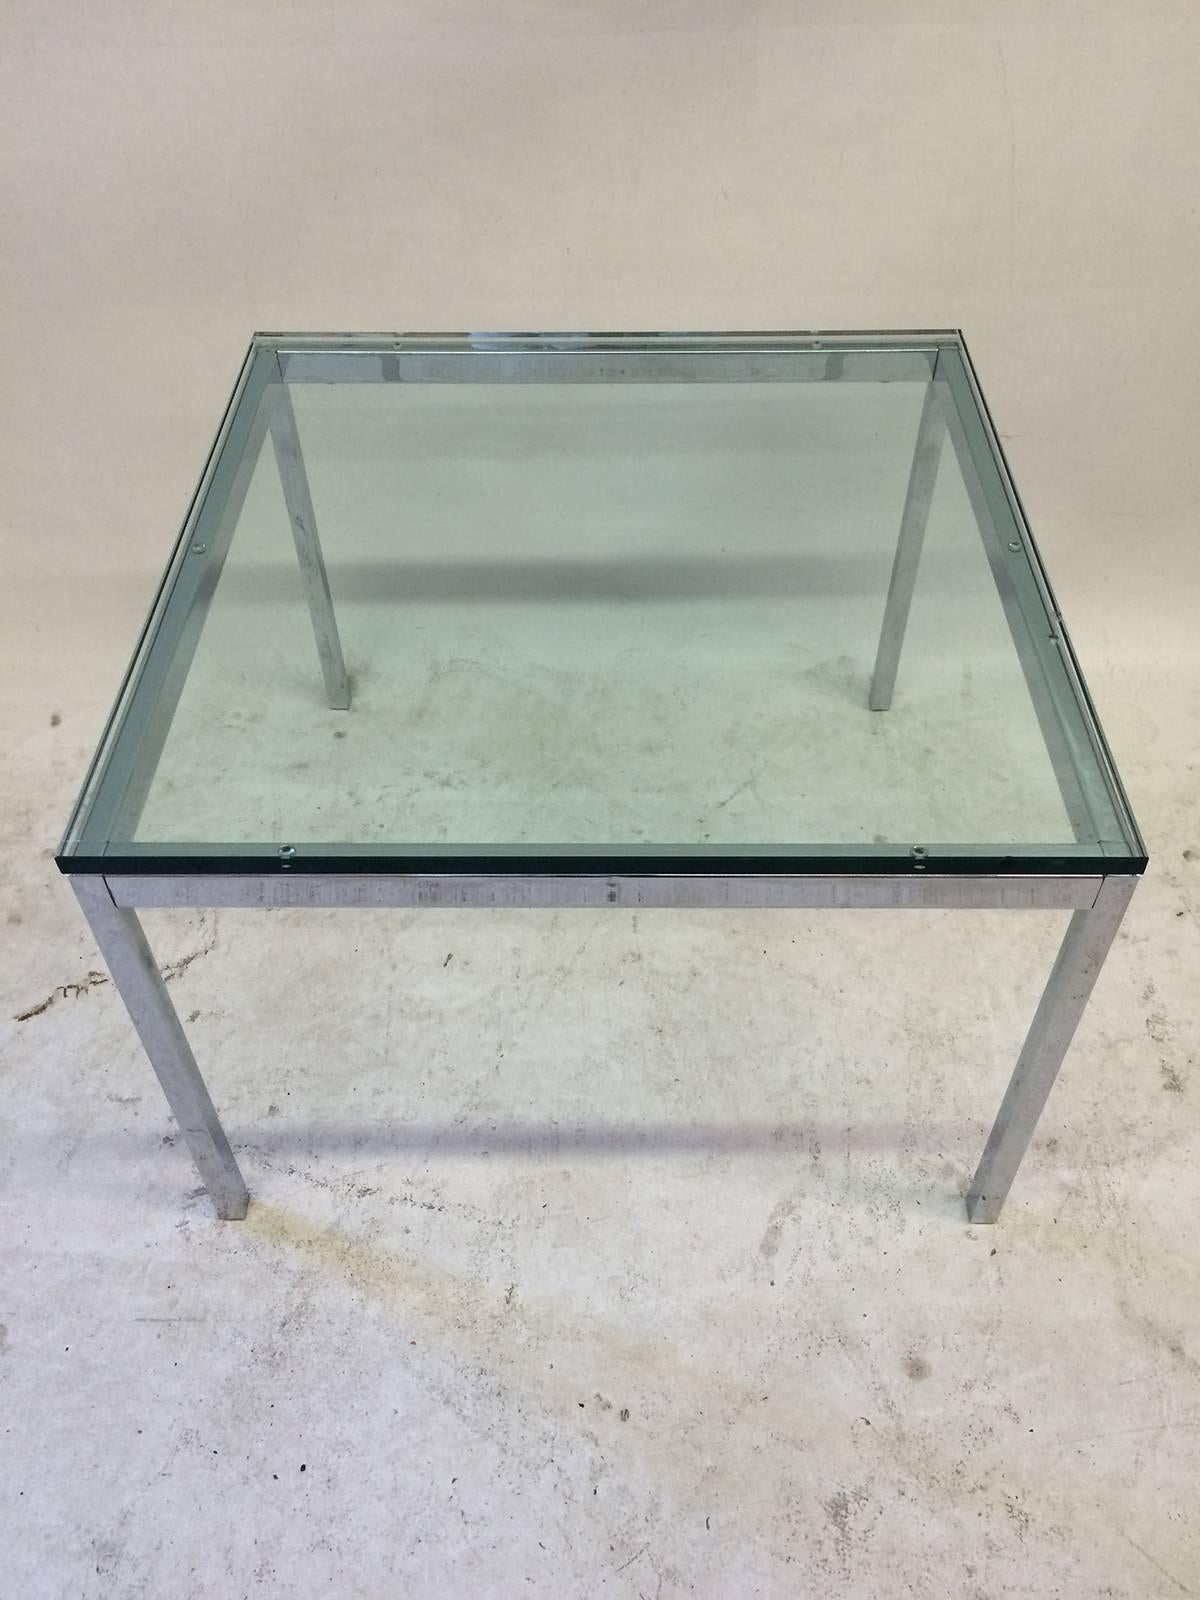 knoll glass table